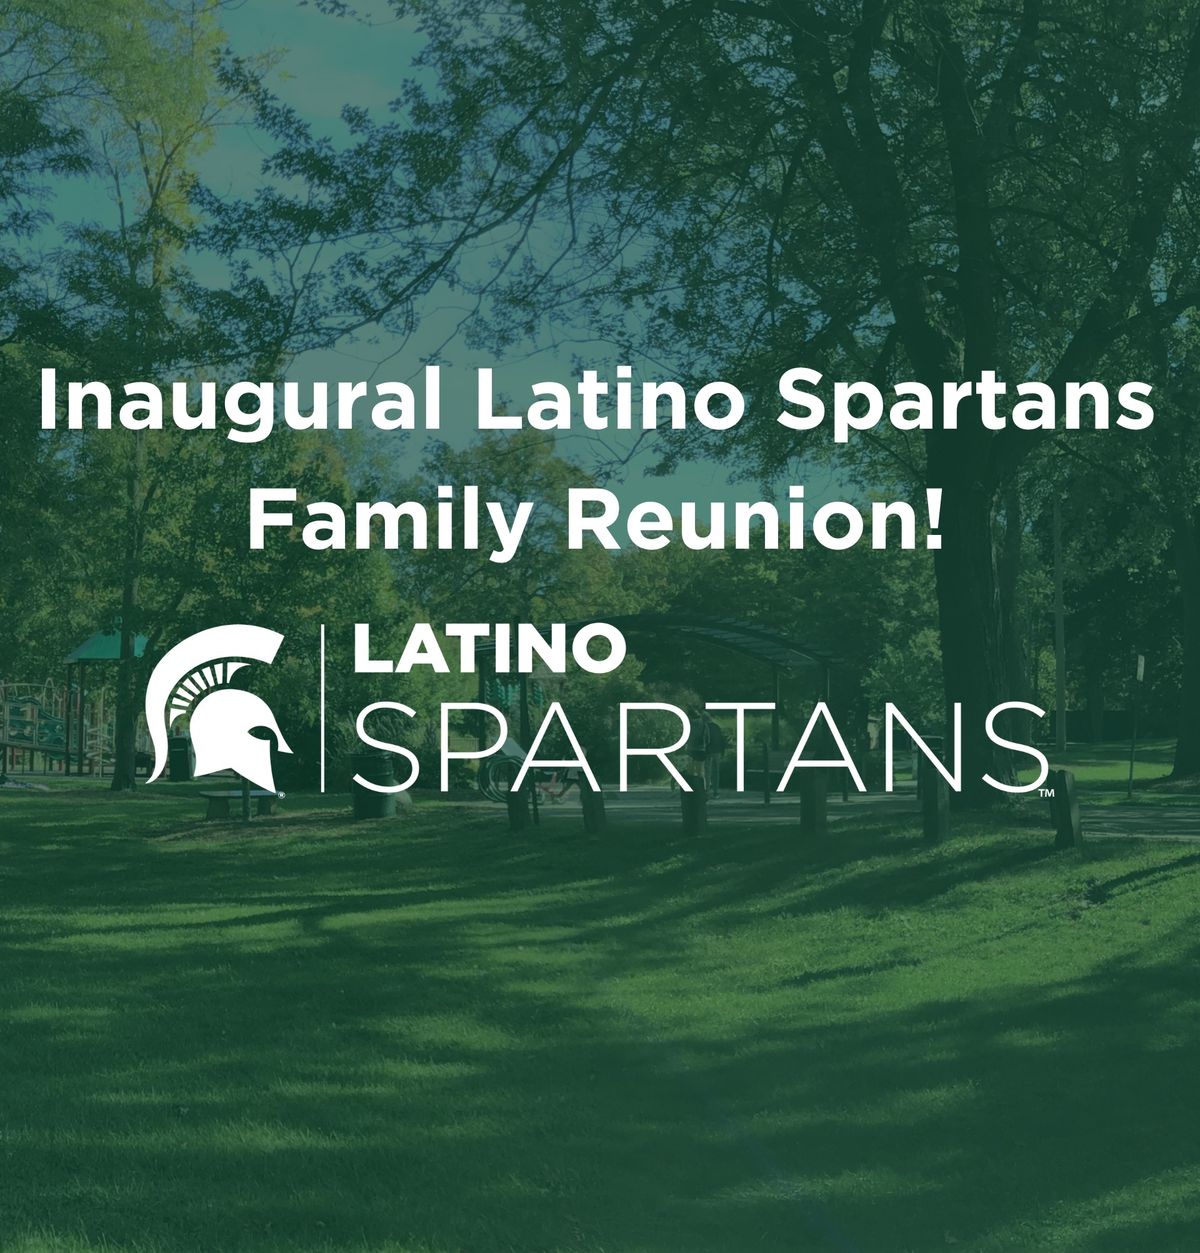 Latino Spartans Family Reunion